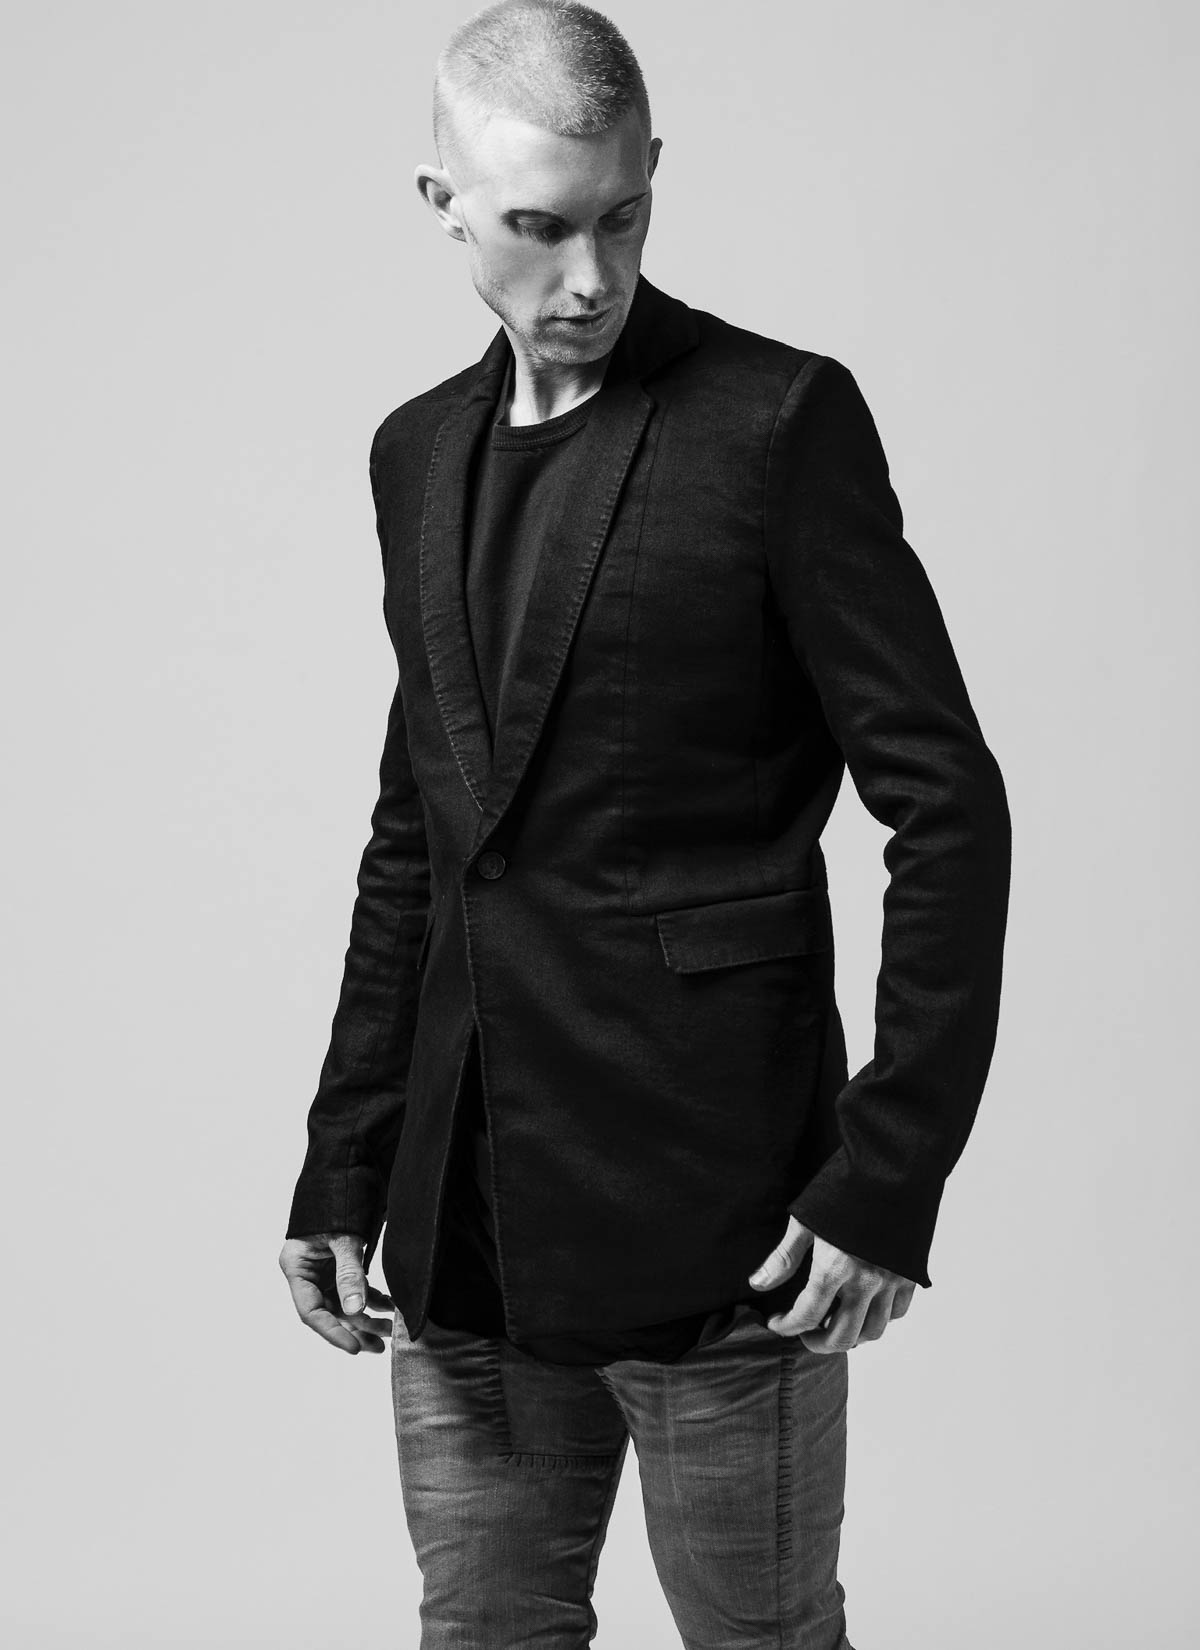 hide-m | BORIS BIDJAN SABERI Blazer Jacket SUIT2, black